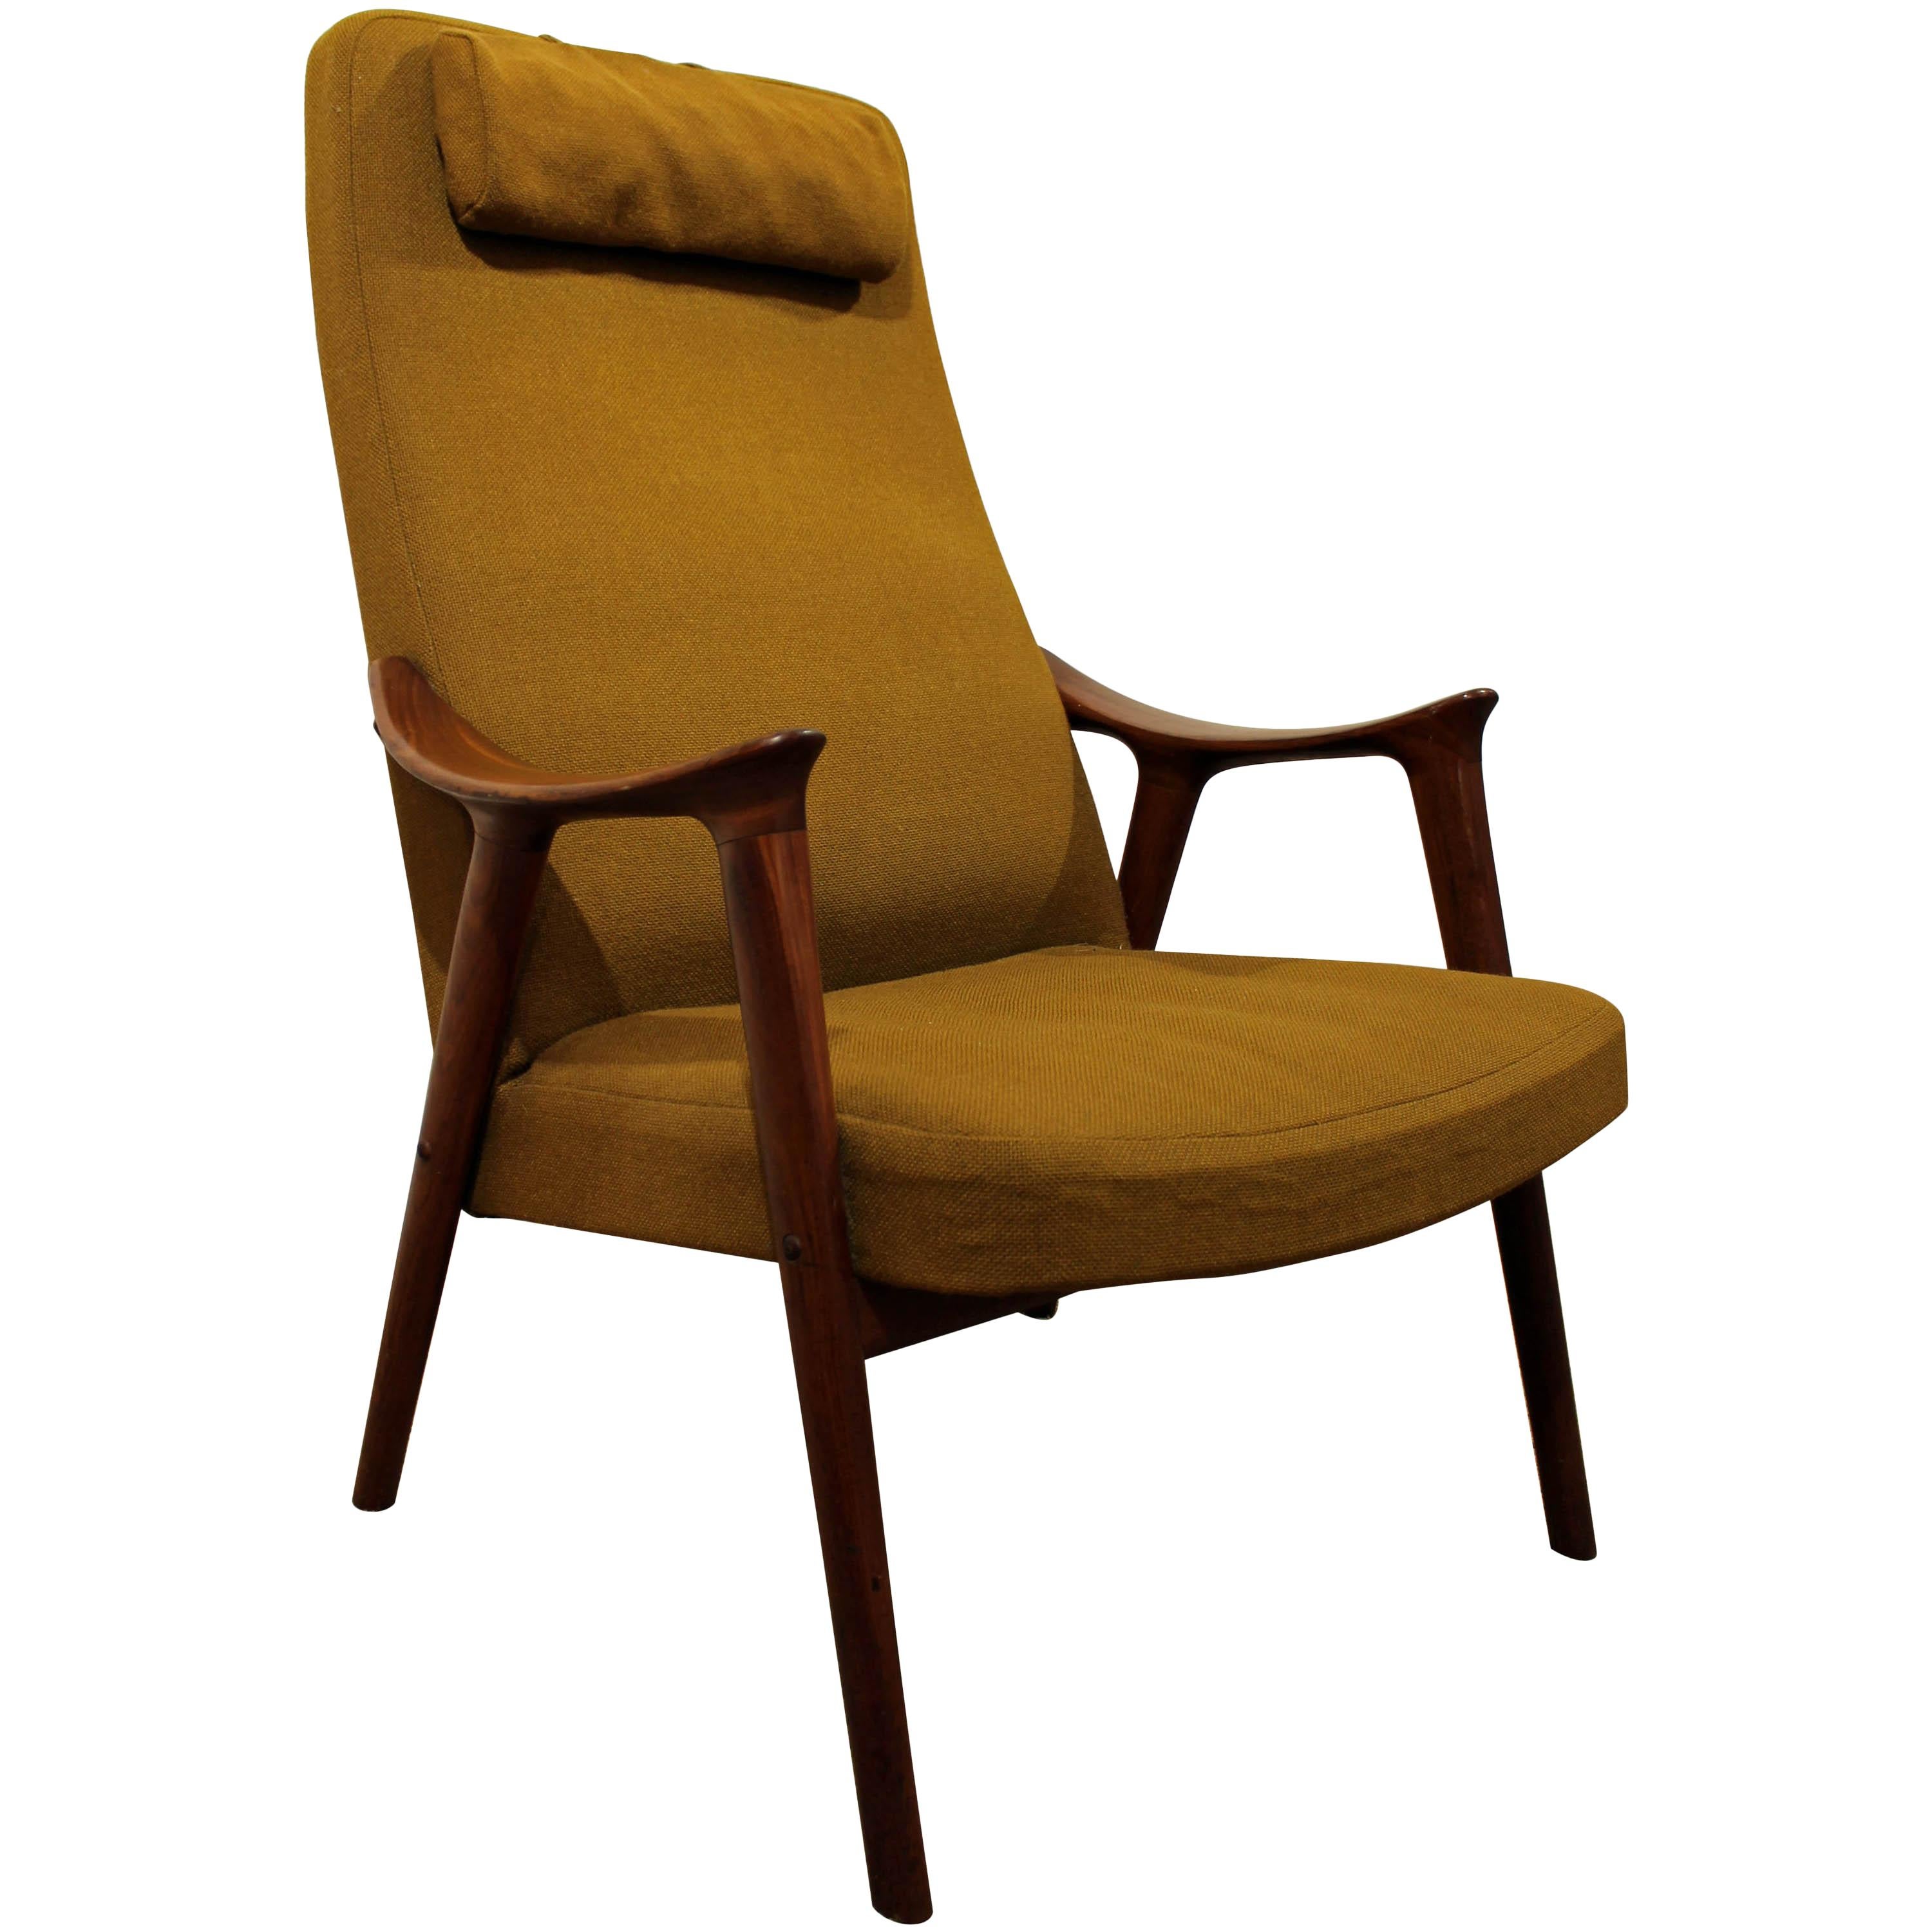 Midcentury Danish Modern Folke Ohlsson Style Teak Lounge Chair